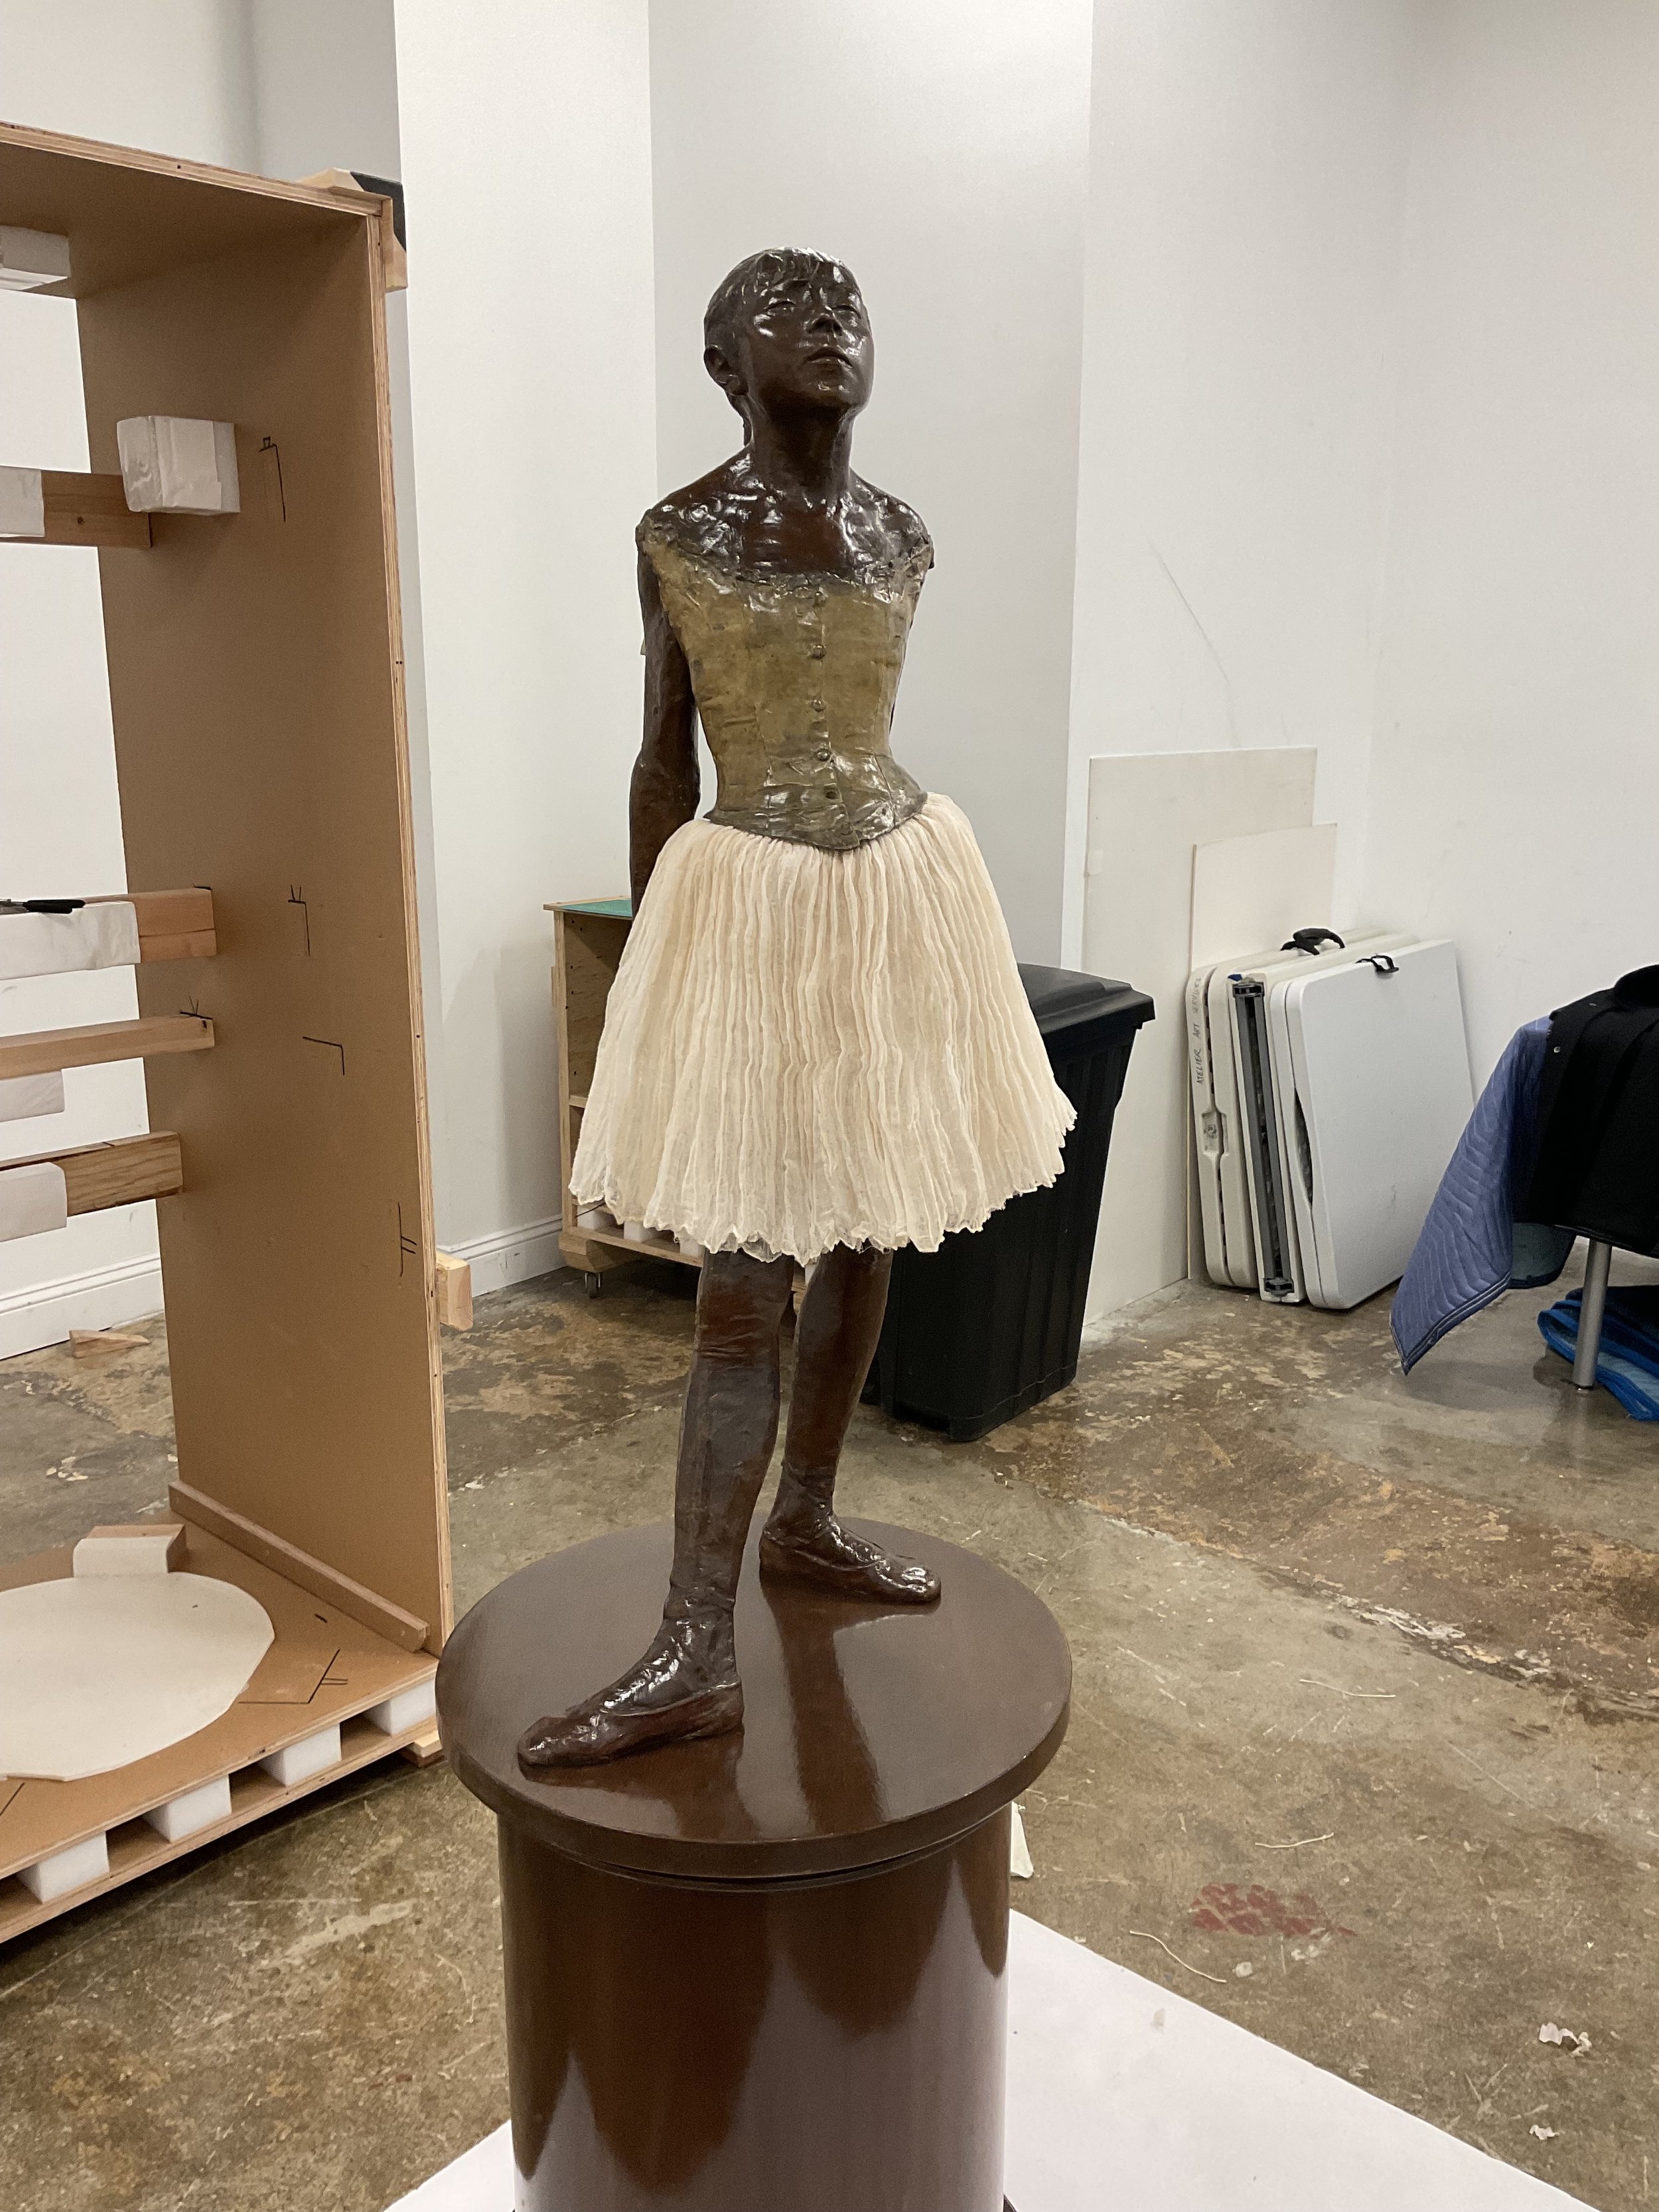  Custom dyed and fabricated cotton tarlatan tutu for Dancer sculpture by Edgar Degas 